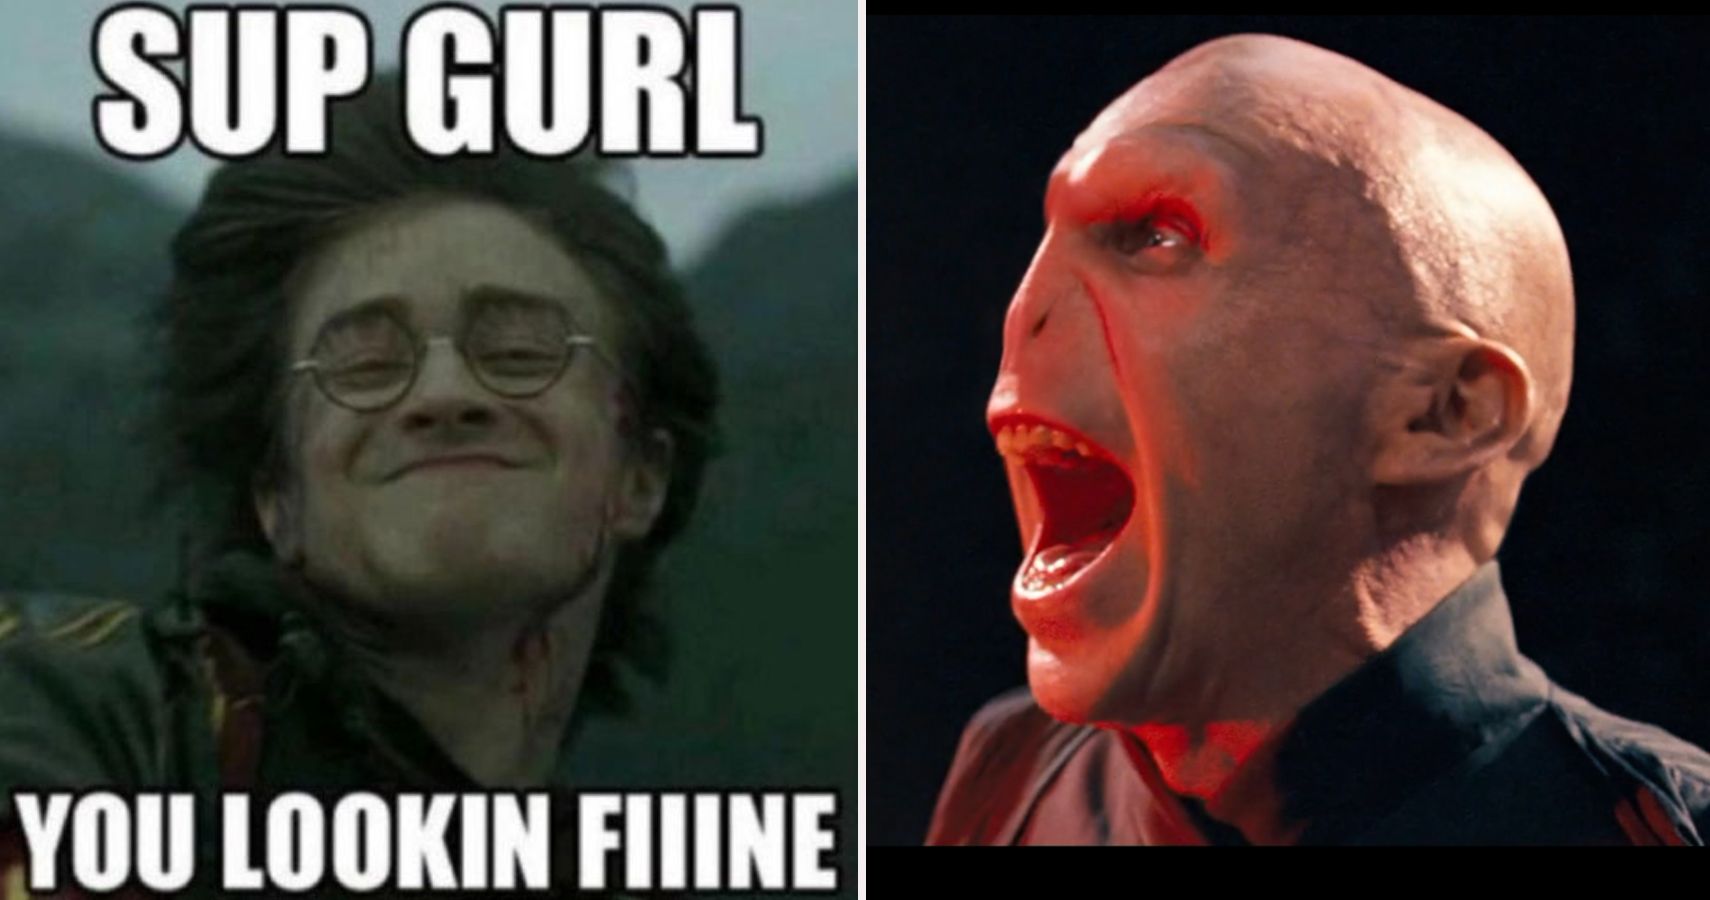 20 Funniest Memes Harry Potter - Memes Run  Harry potter memes, Harry  potter funny, Harry potter jokes